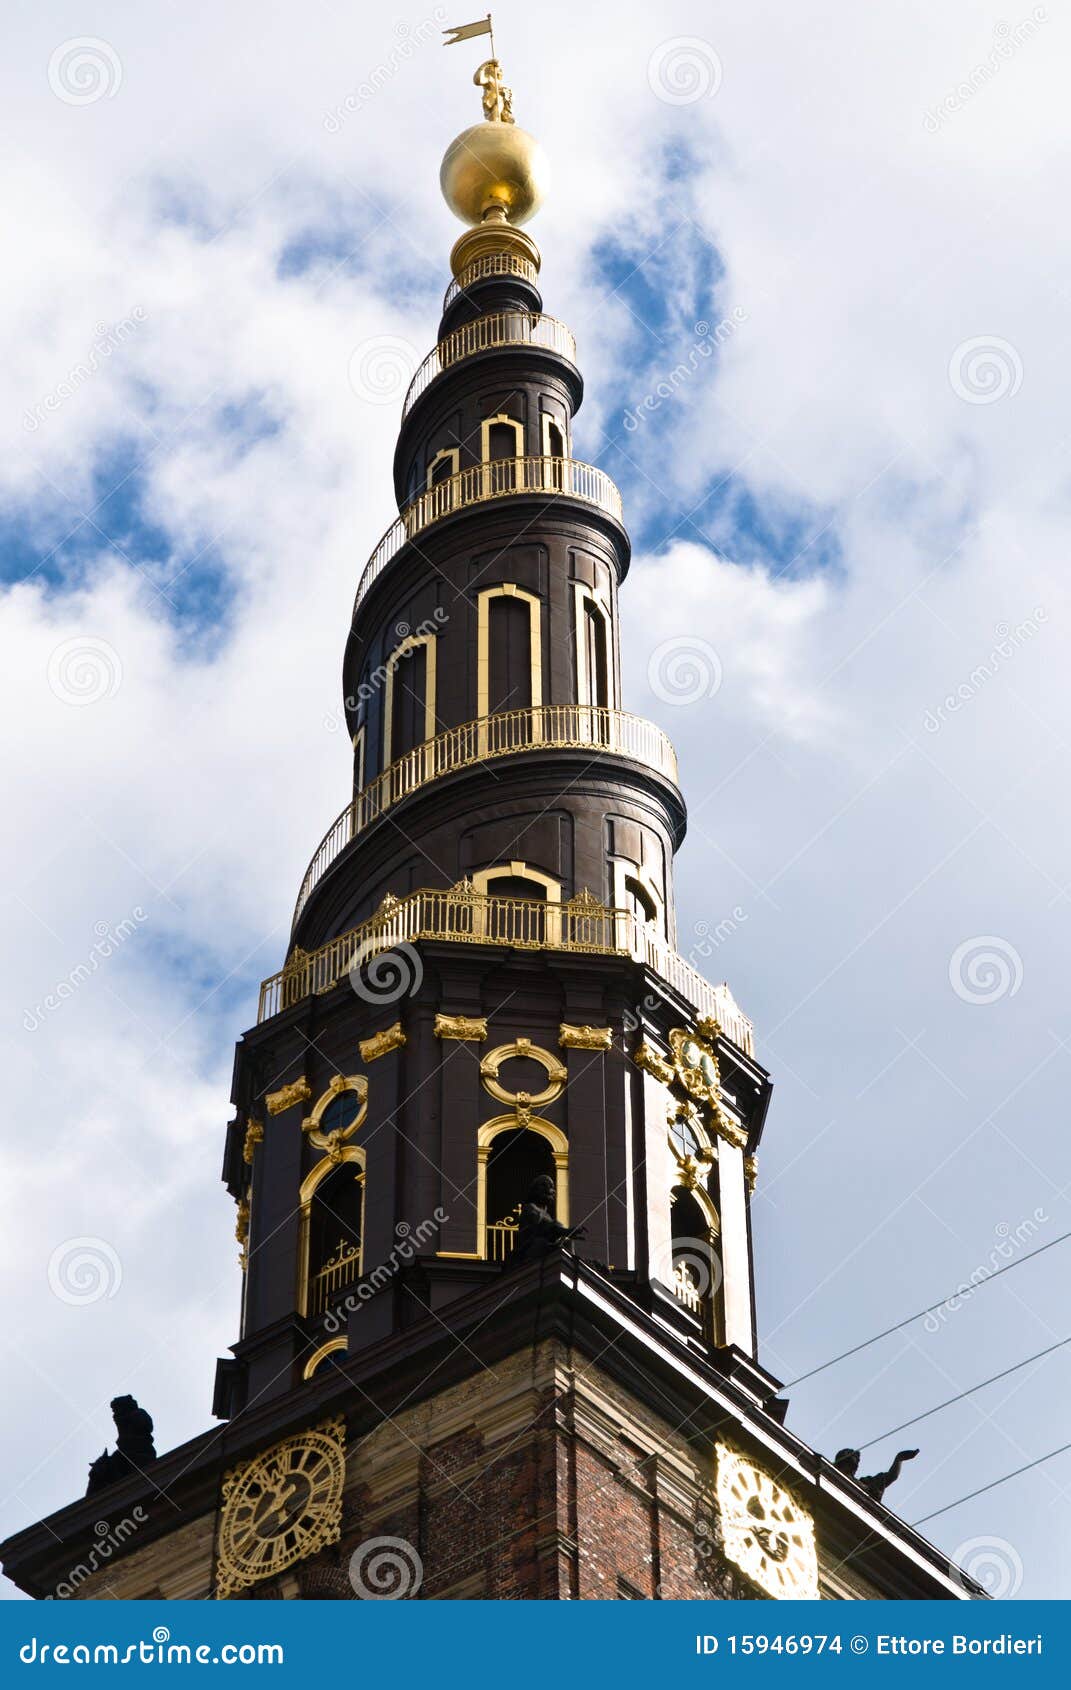 Kammerat Indirekte Se venligst The Church of Our Saviour, Copenhagen, Denmark Stock Photo - Image of  christianshavn, vertical: 15946974